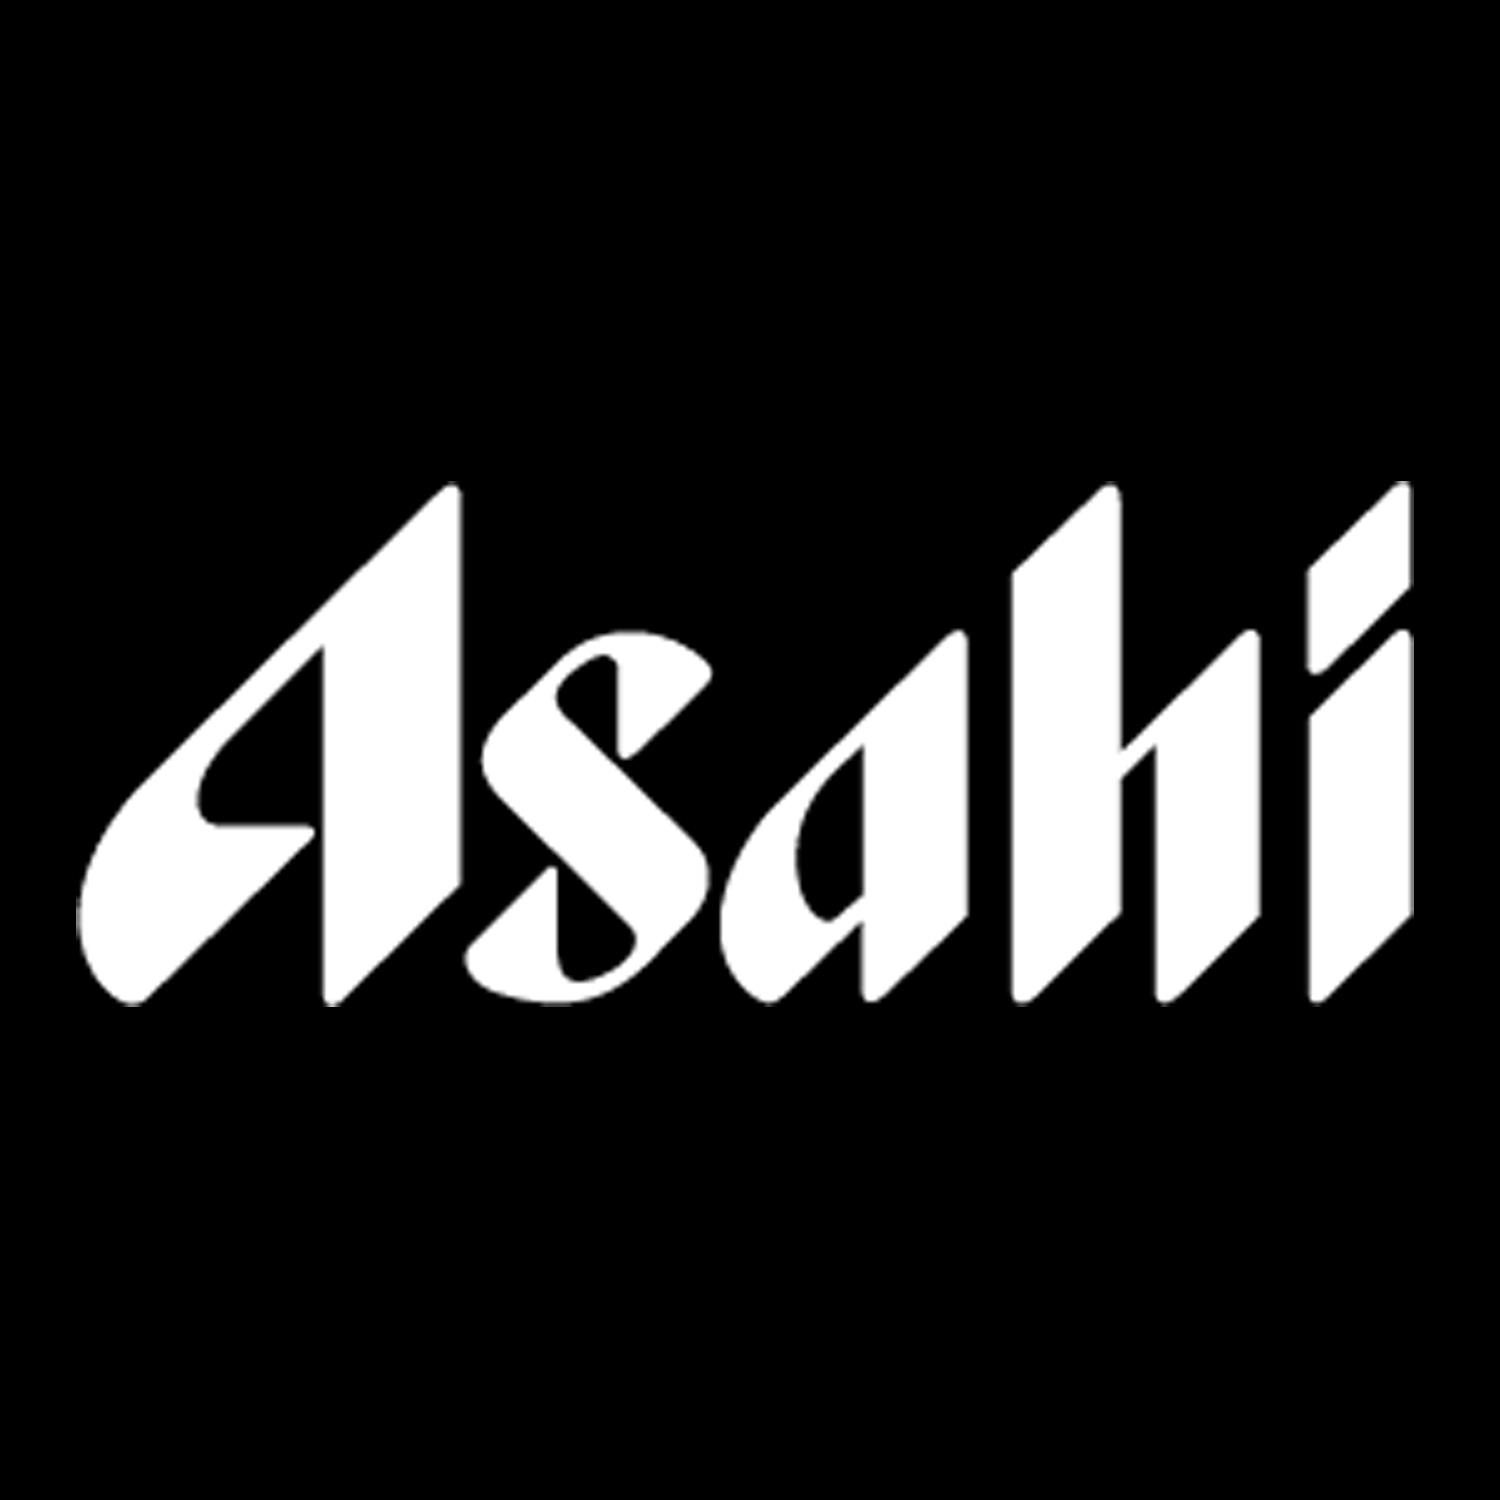 朝日 Asahi